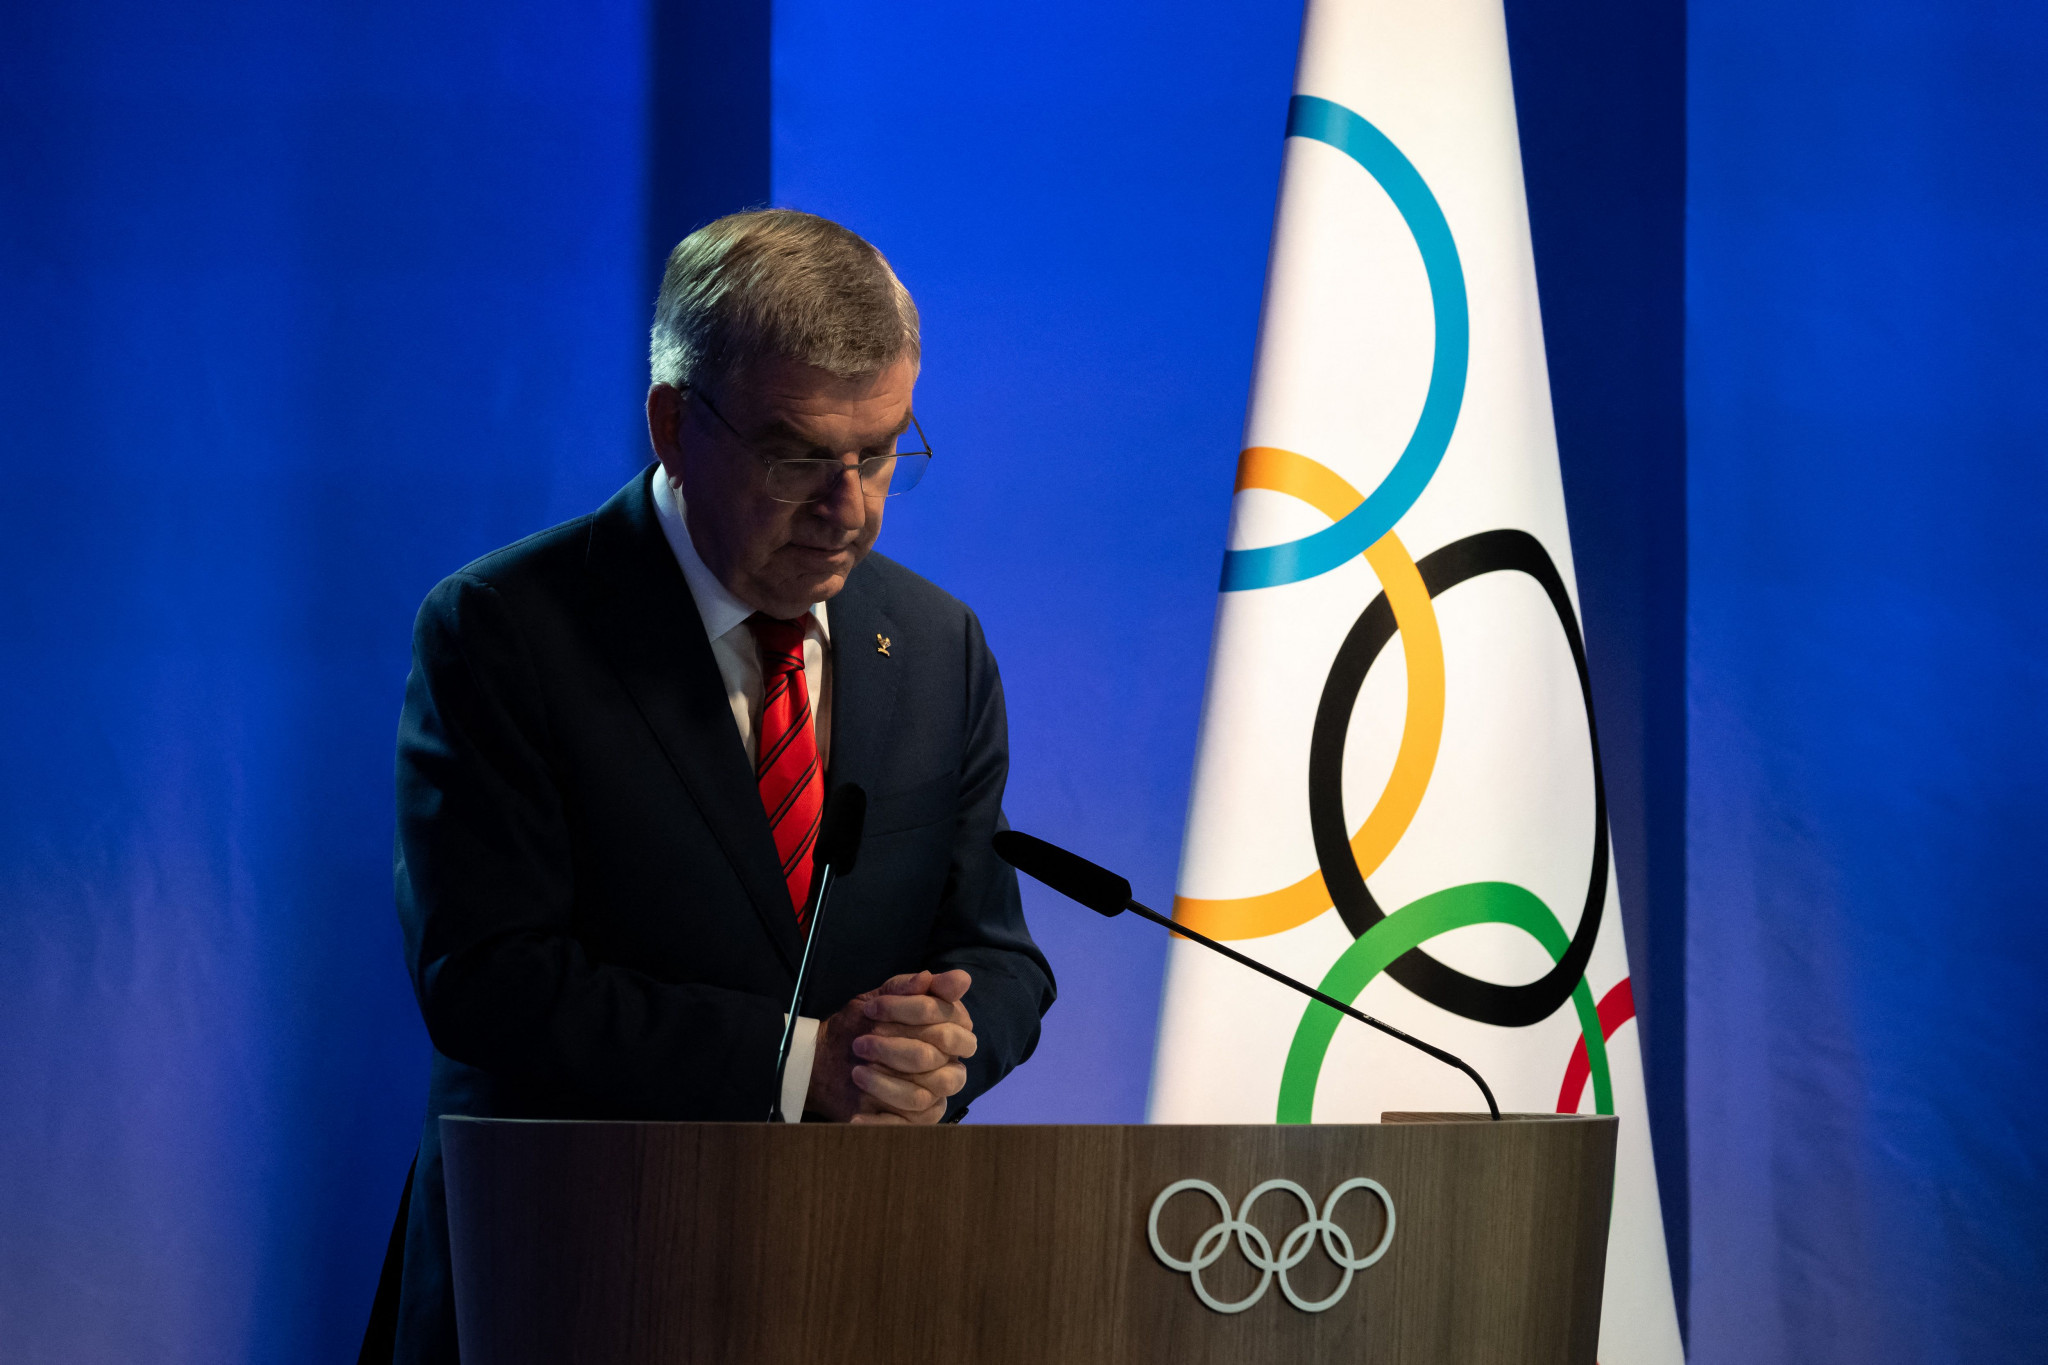 IOC President Thomas Bach admitted 